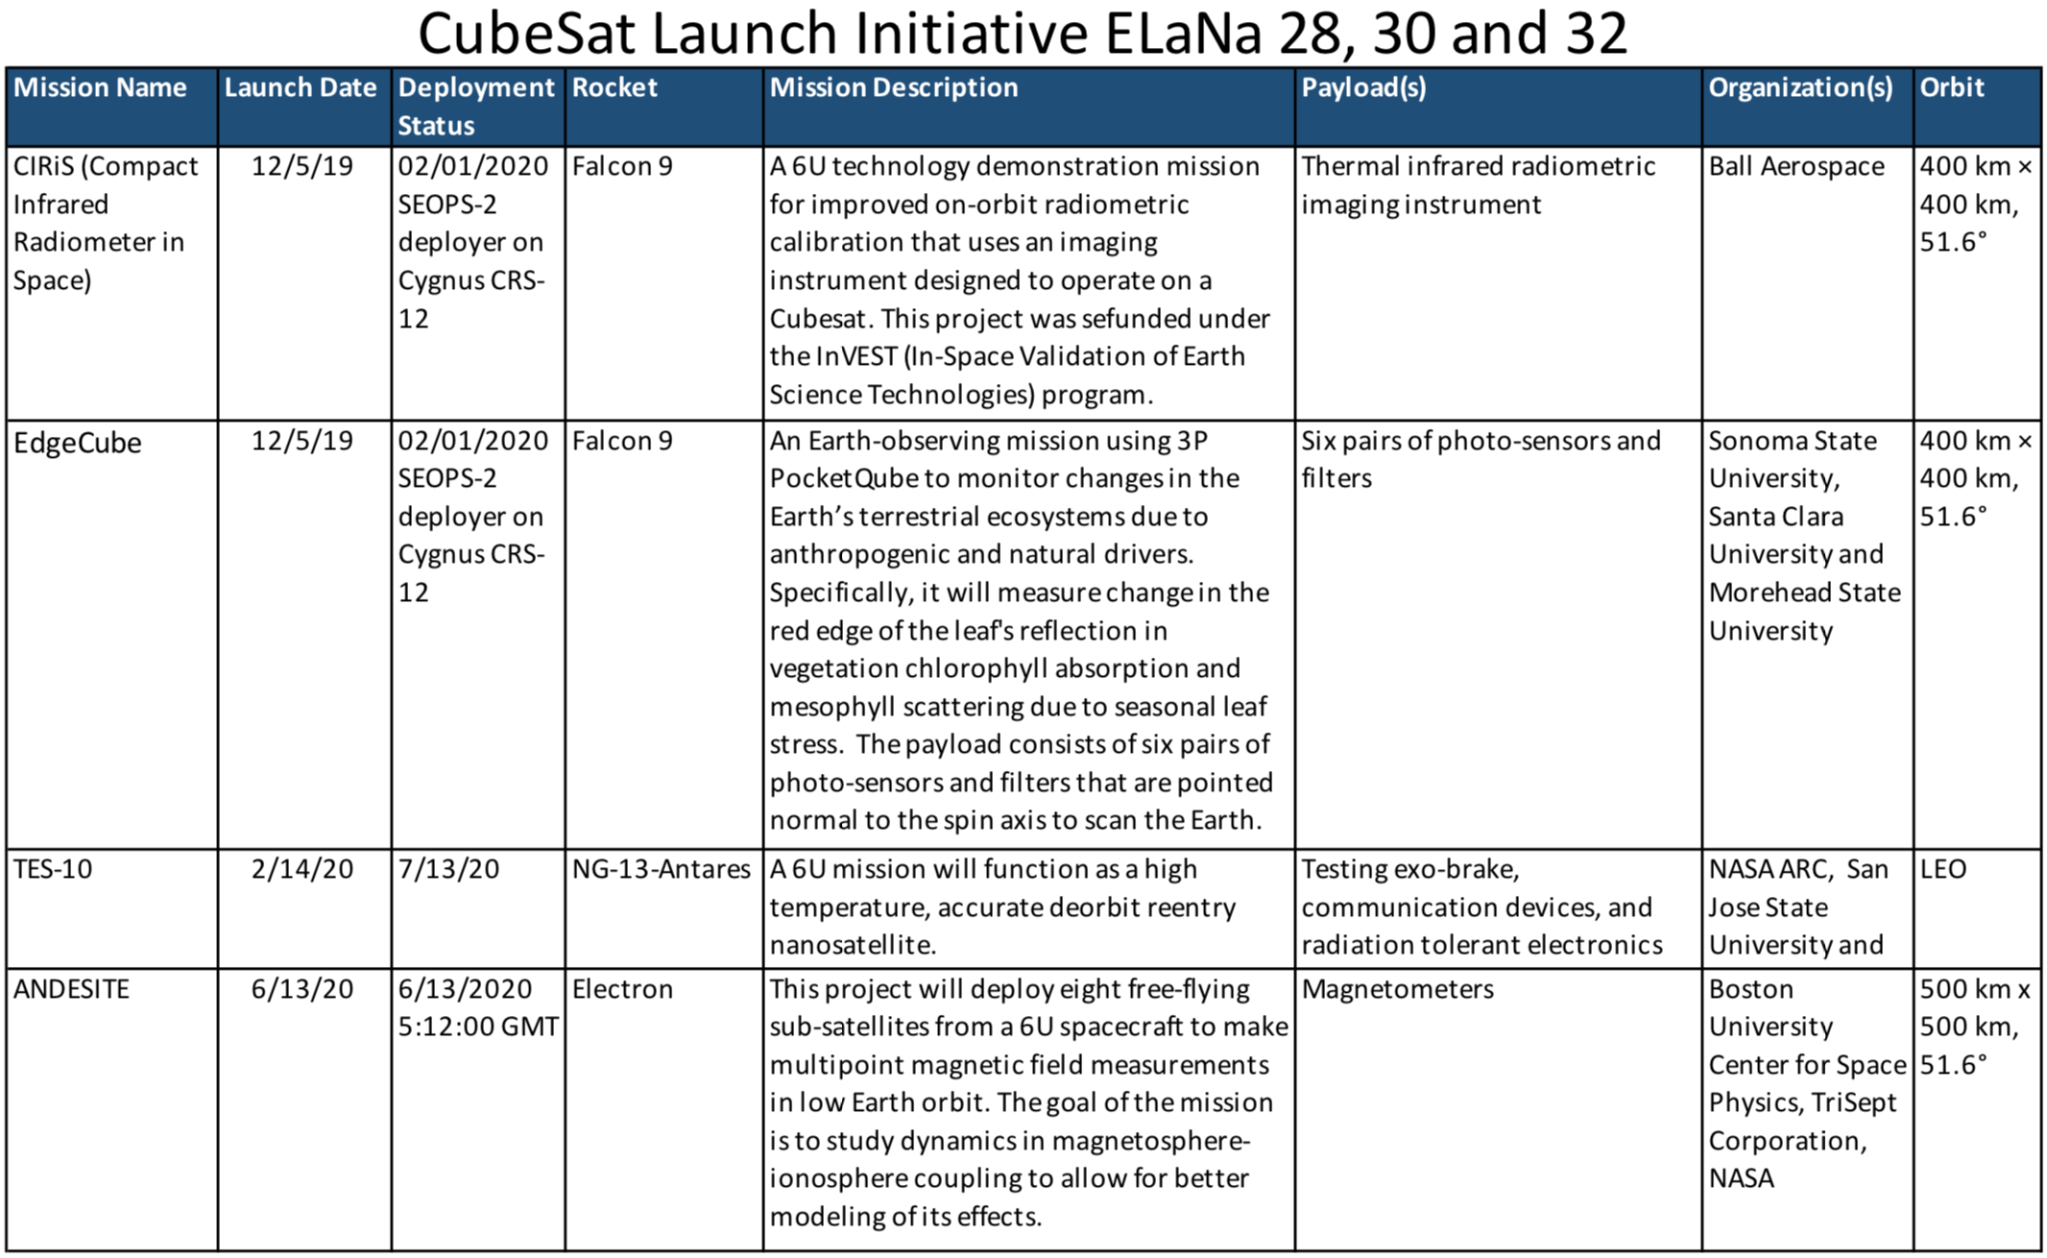 Cubesat Launch Initiative ELaNa 28, 30 and 32